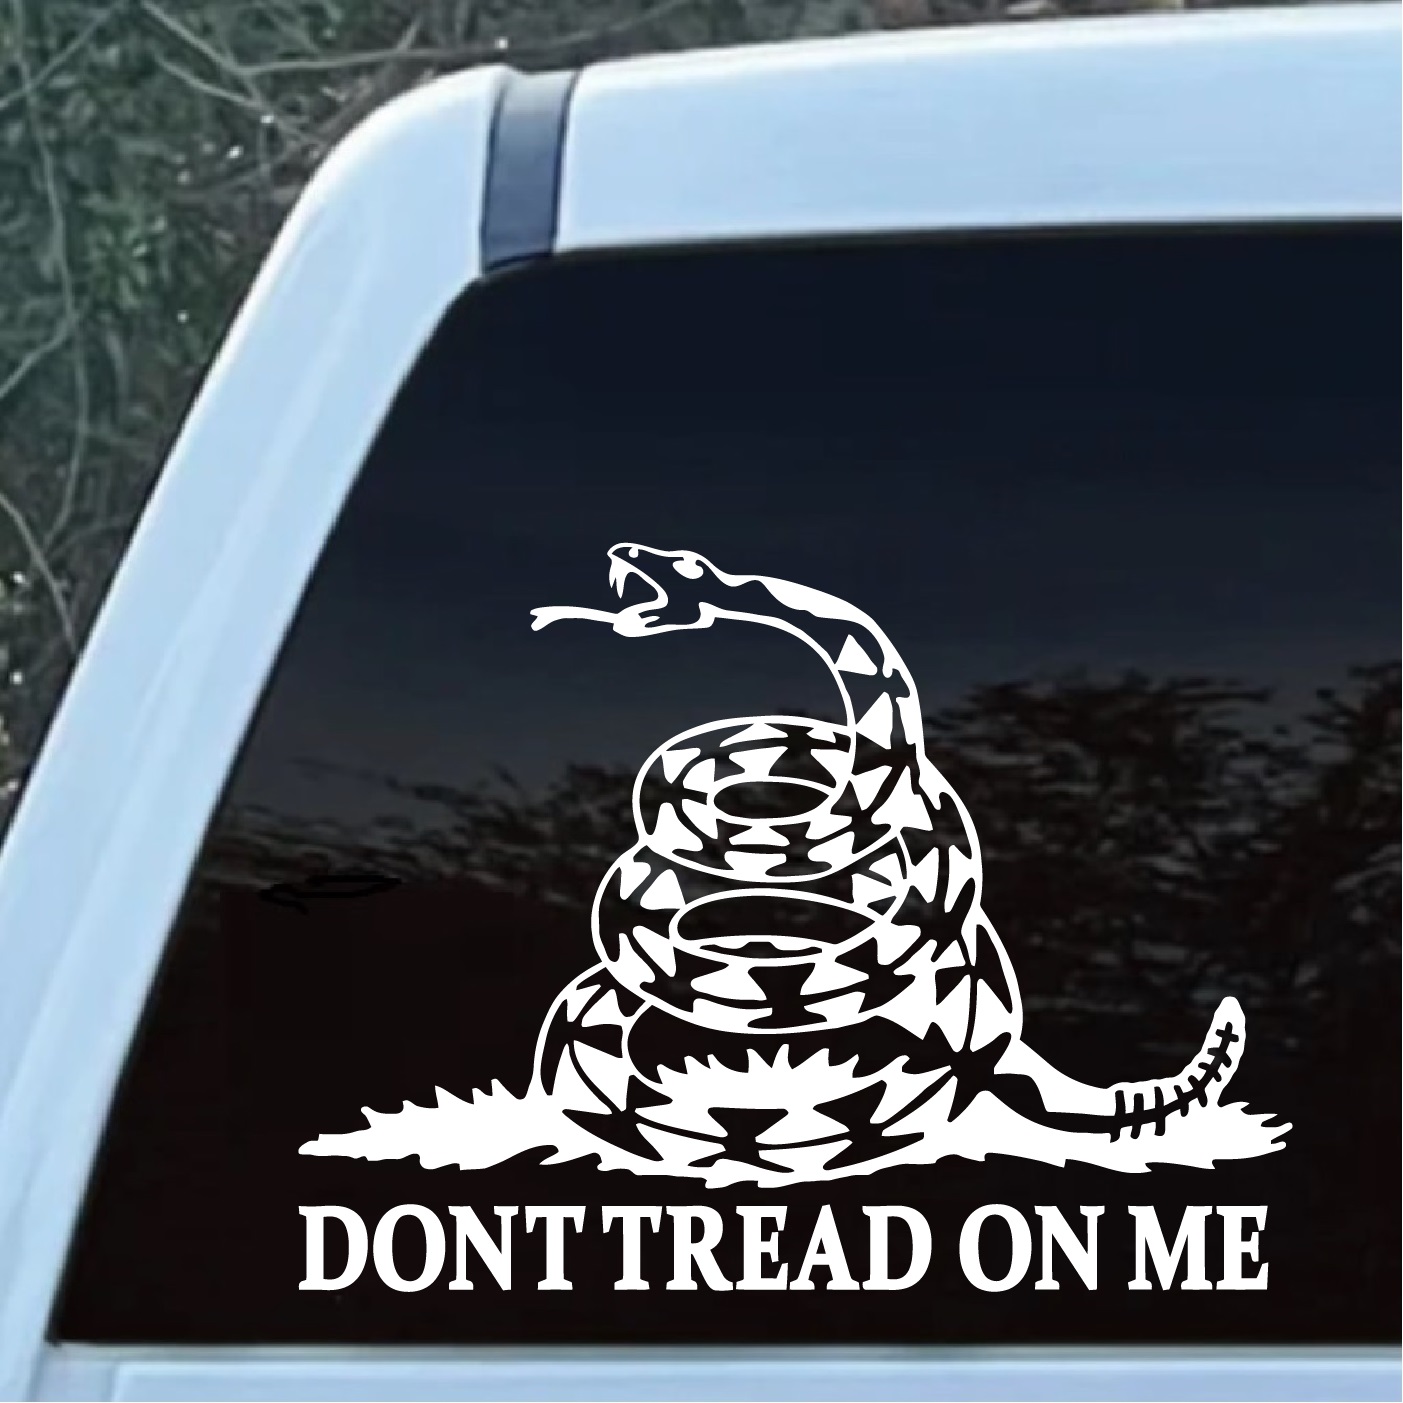 WSQ No Step on Snek Flag Funny Gadsden Don't Tread On Me (2 Pack) - 5 x 3  Inches - Vinyl Decal Sticker for Car Truck SUV Van Window Bumper Wall  Laptop